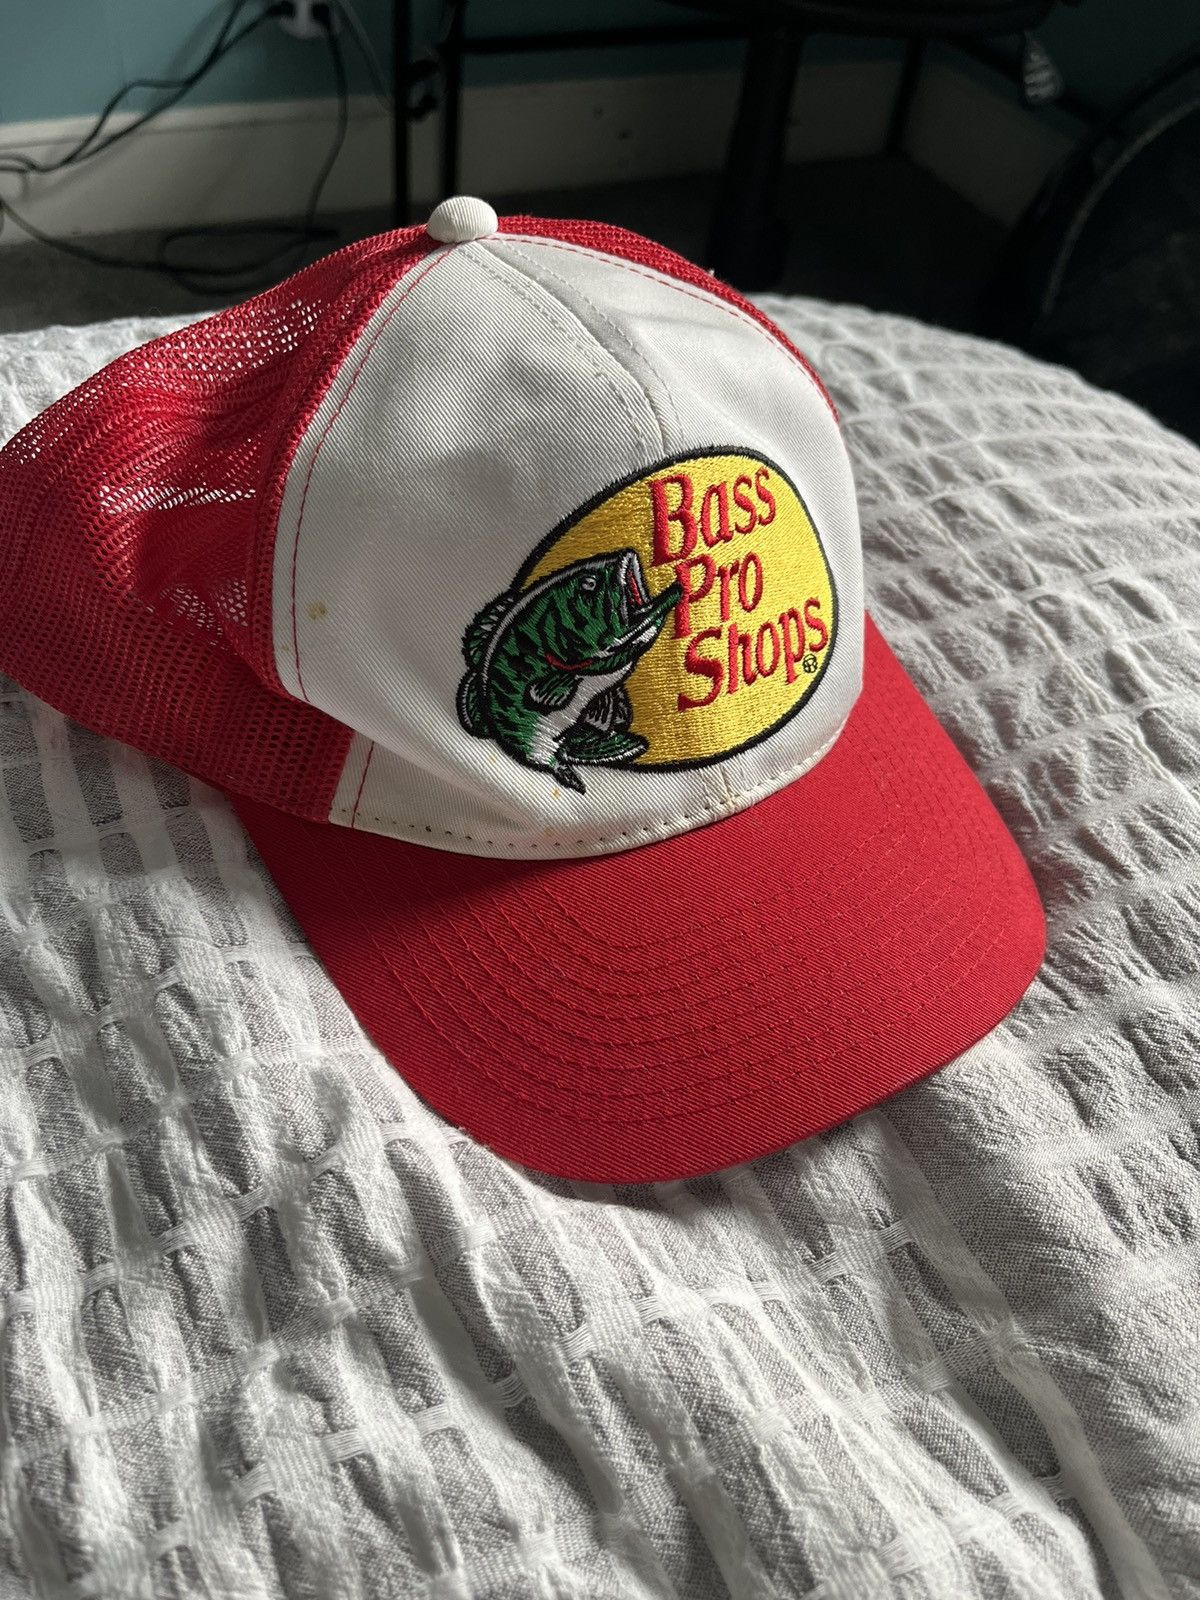 Vintage Bass pro shops hat